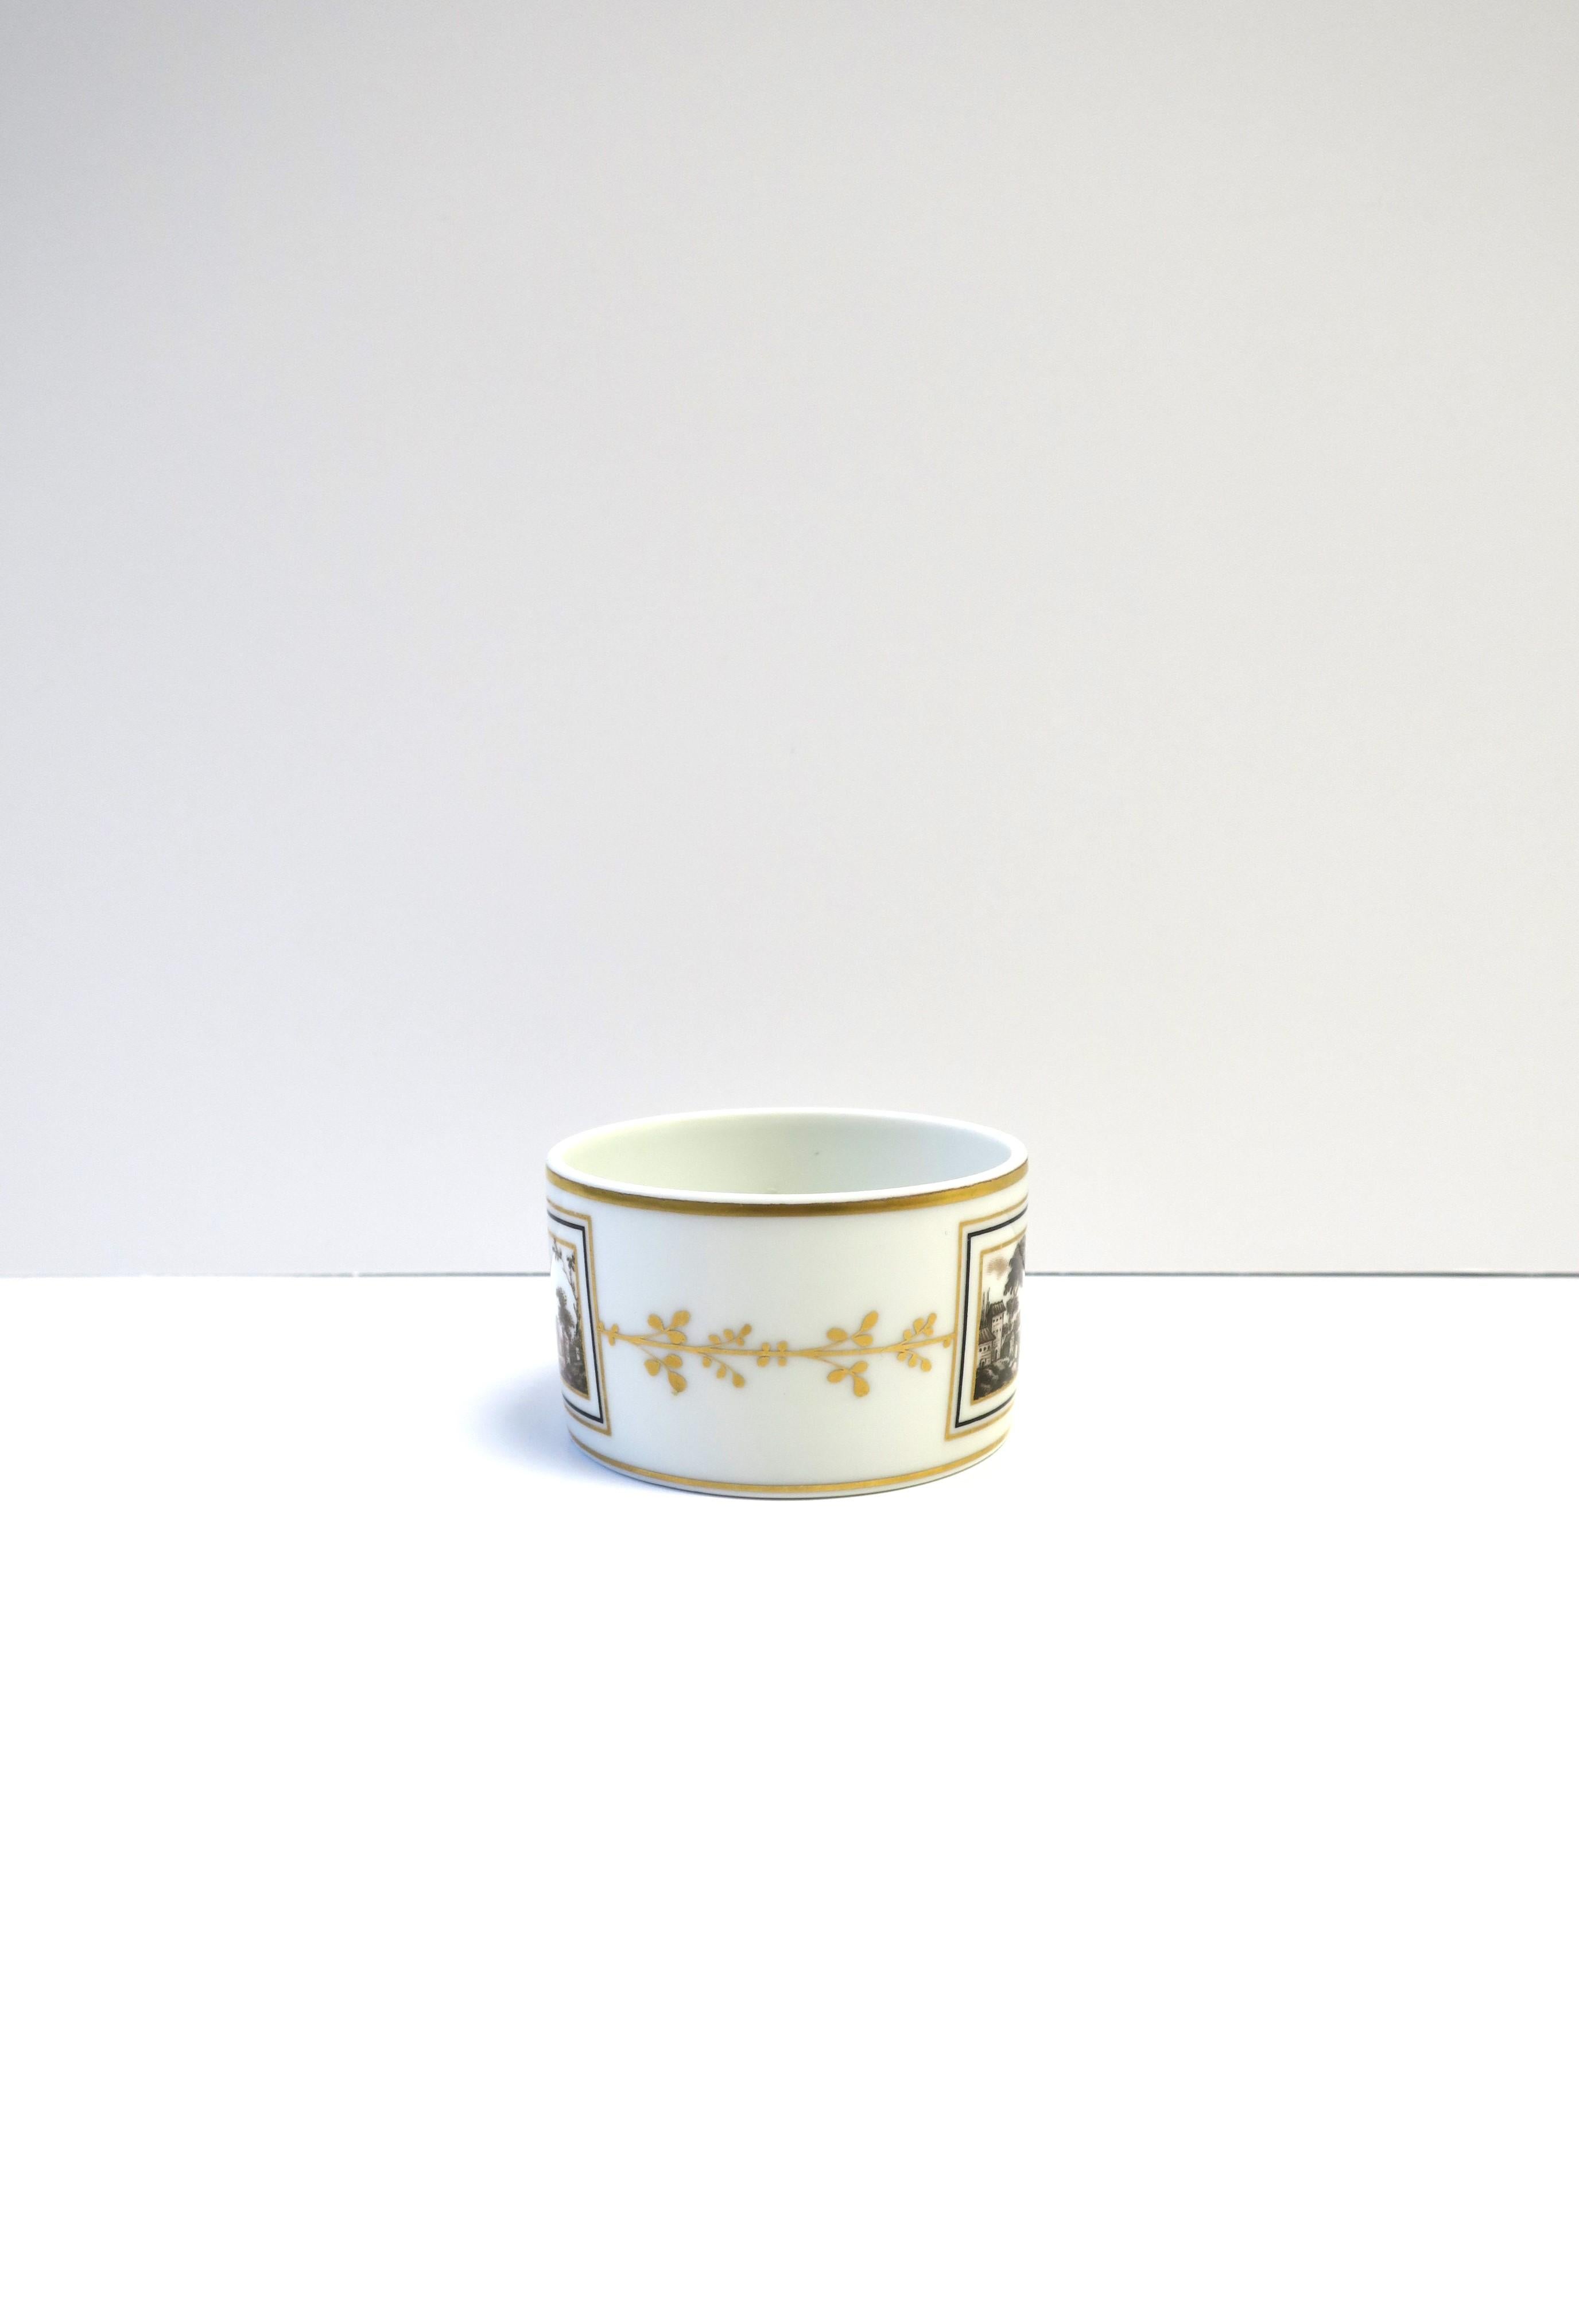 Richard Ginori White Porcelain & Gold Italian Jewelry Dish or Vessel For Sale 4